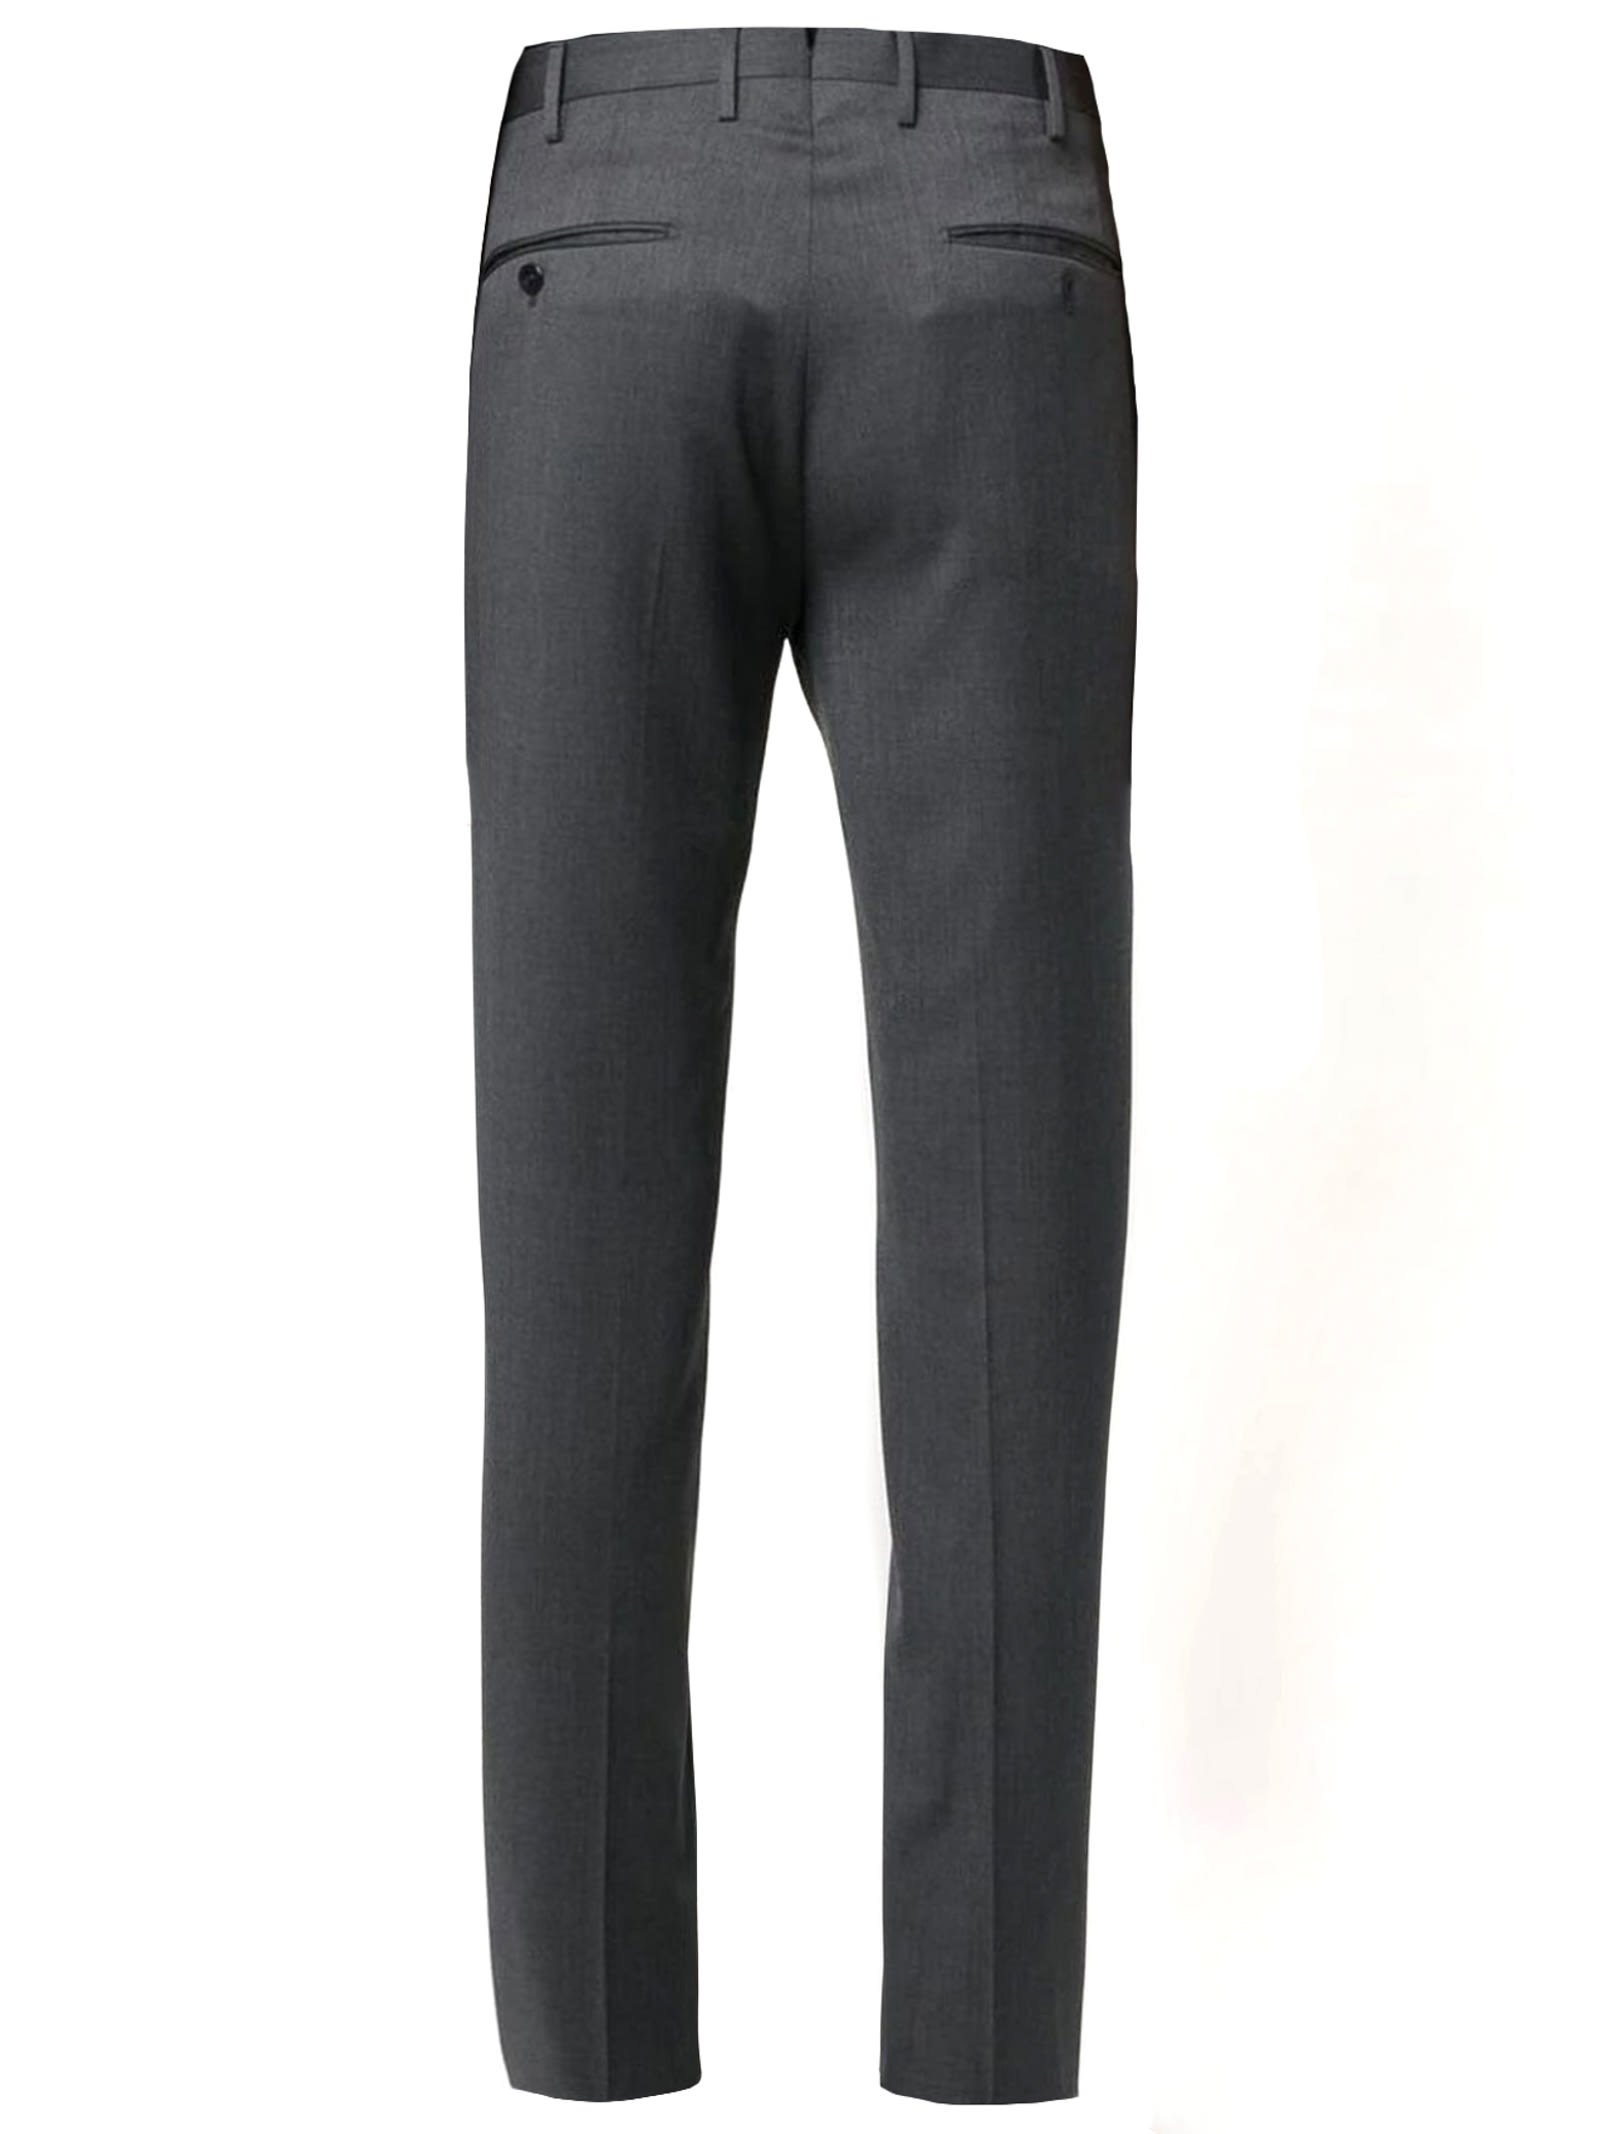 Shop Incotex Charcoal Grey Virgin Wool Trousers